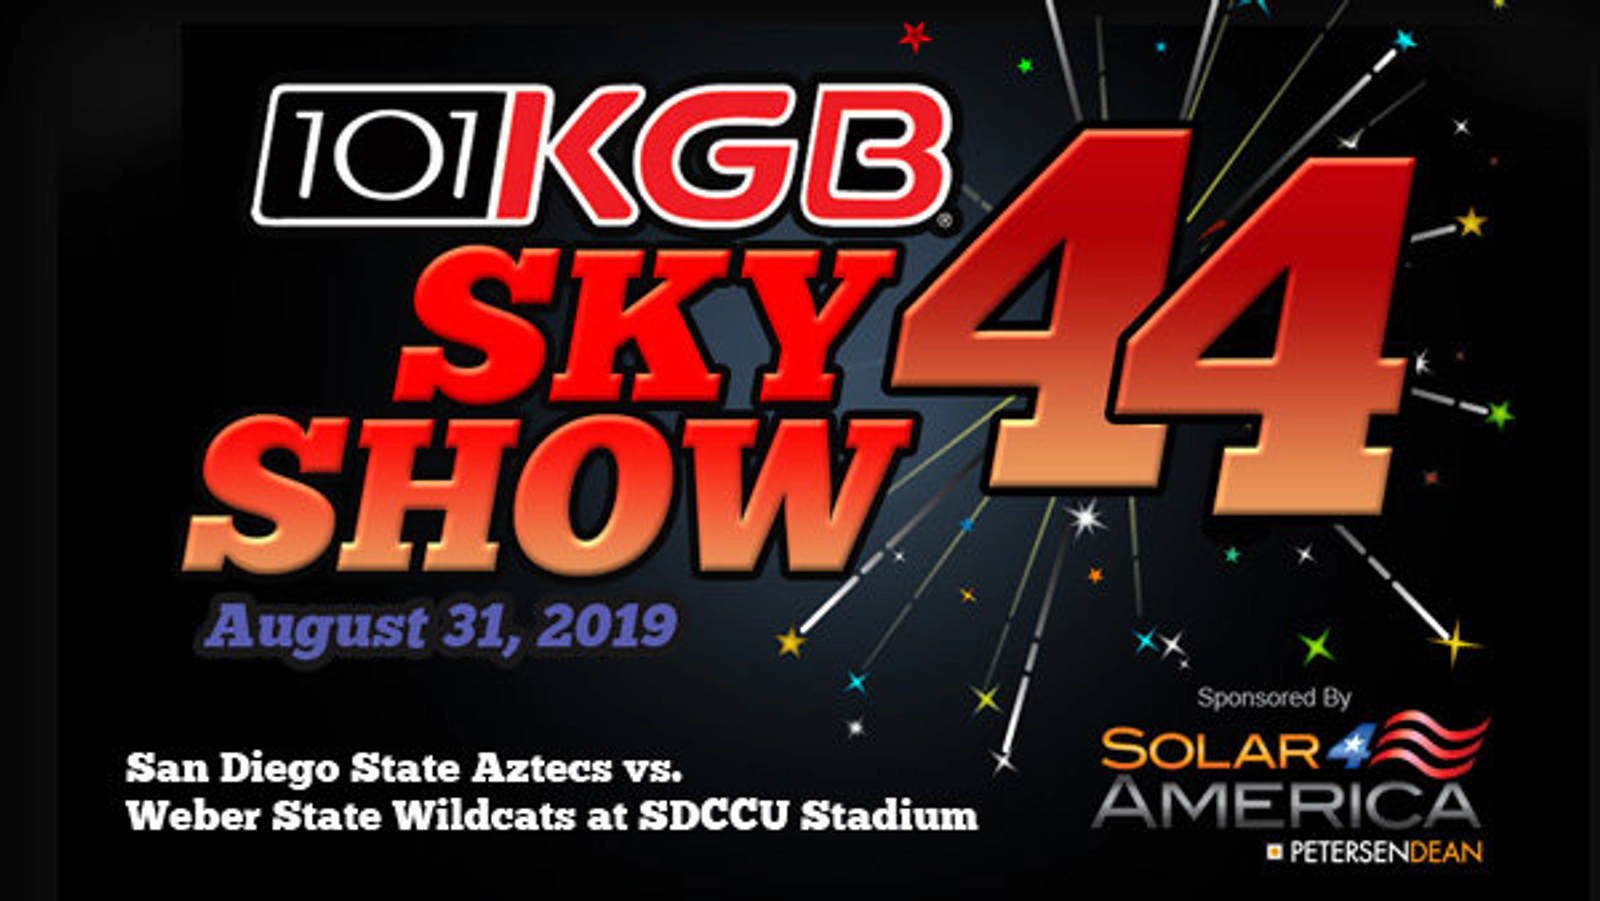 Win KGB Sky Show 44 Tickets - Thumbnail Image